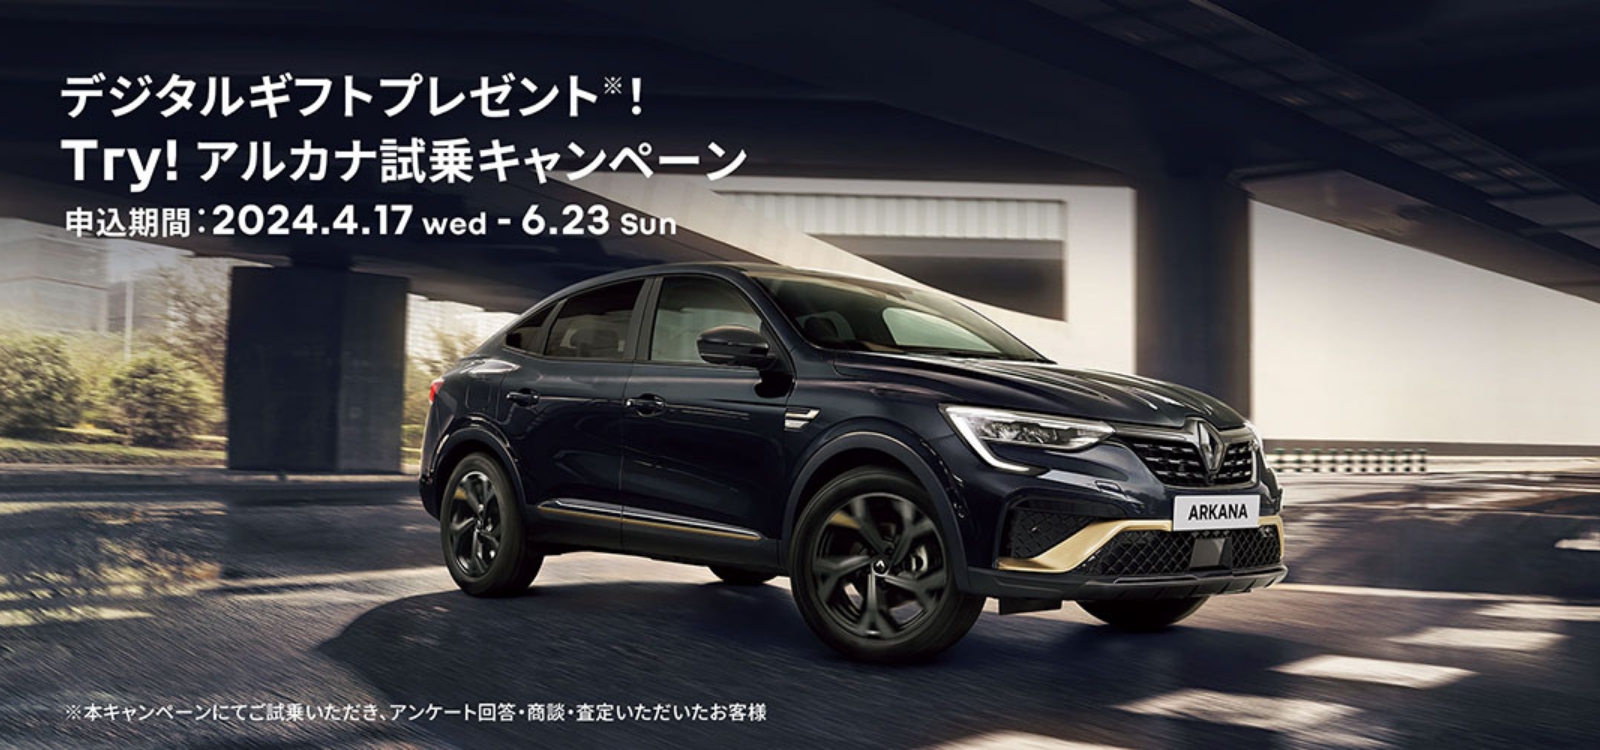 Renault Japon | Try!アルカナ 試乗キャンペーン